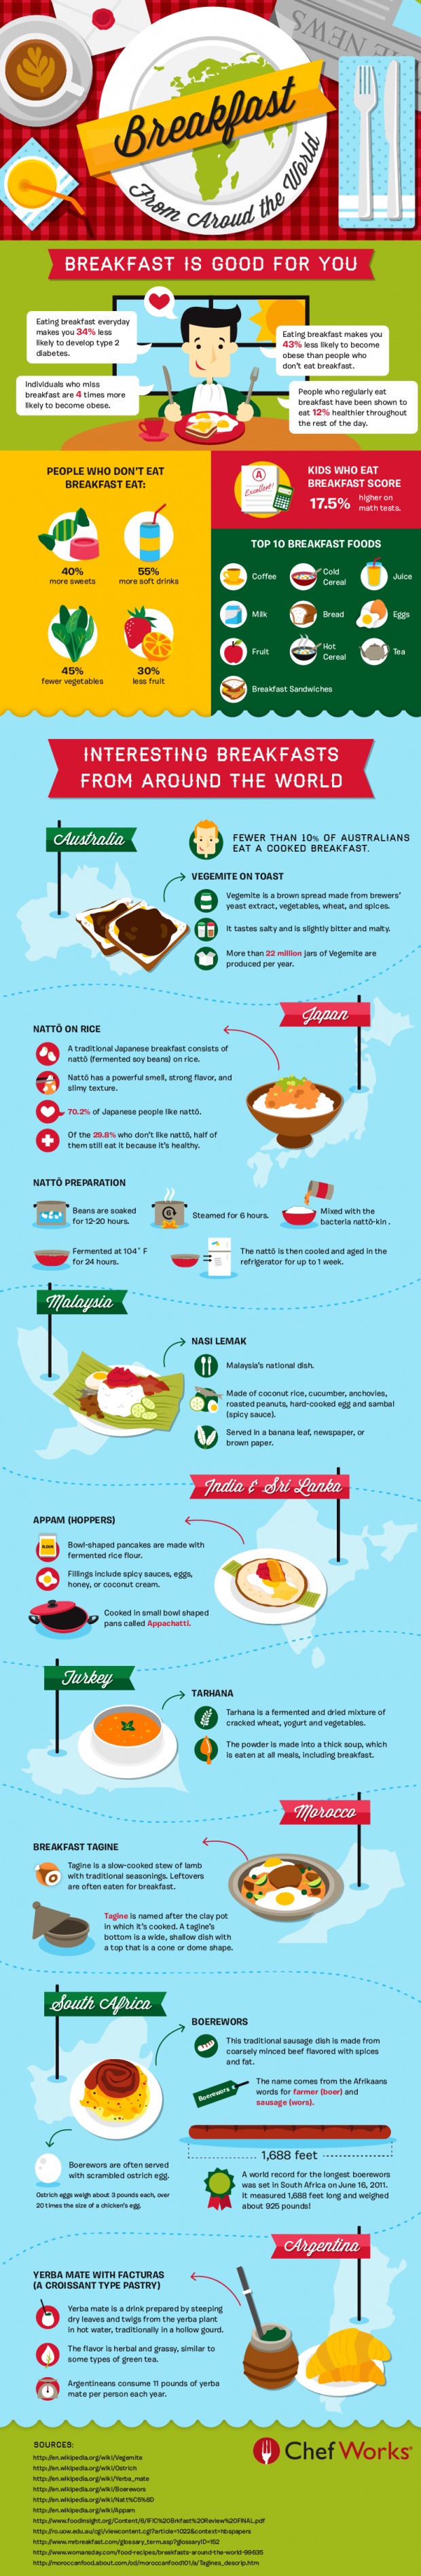 breakfast around the world infographic